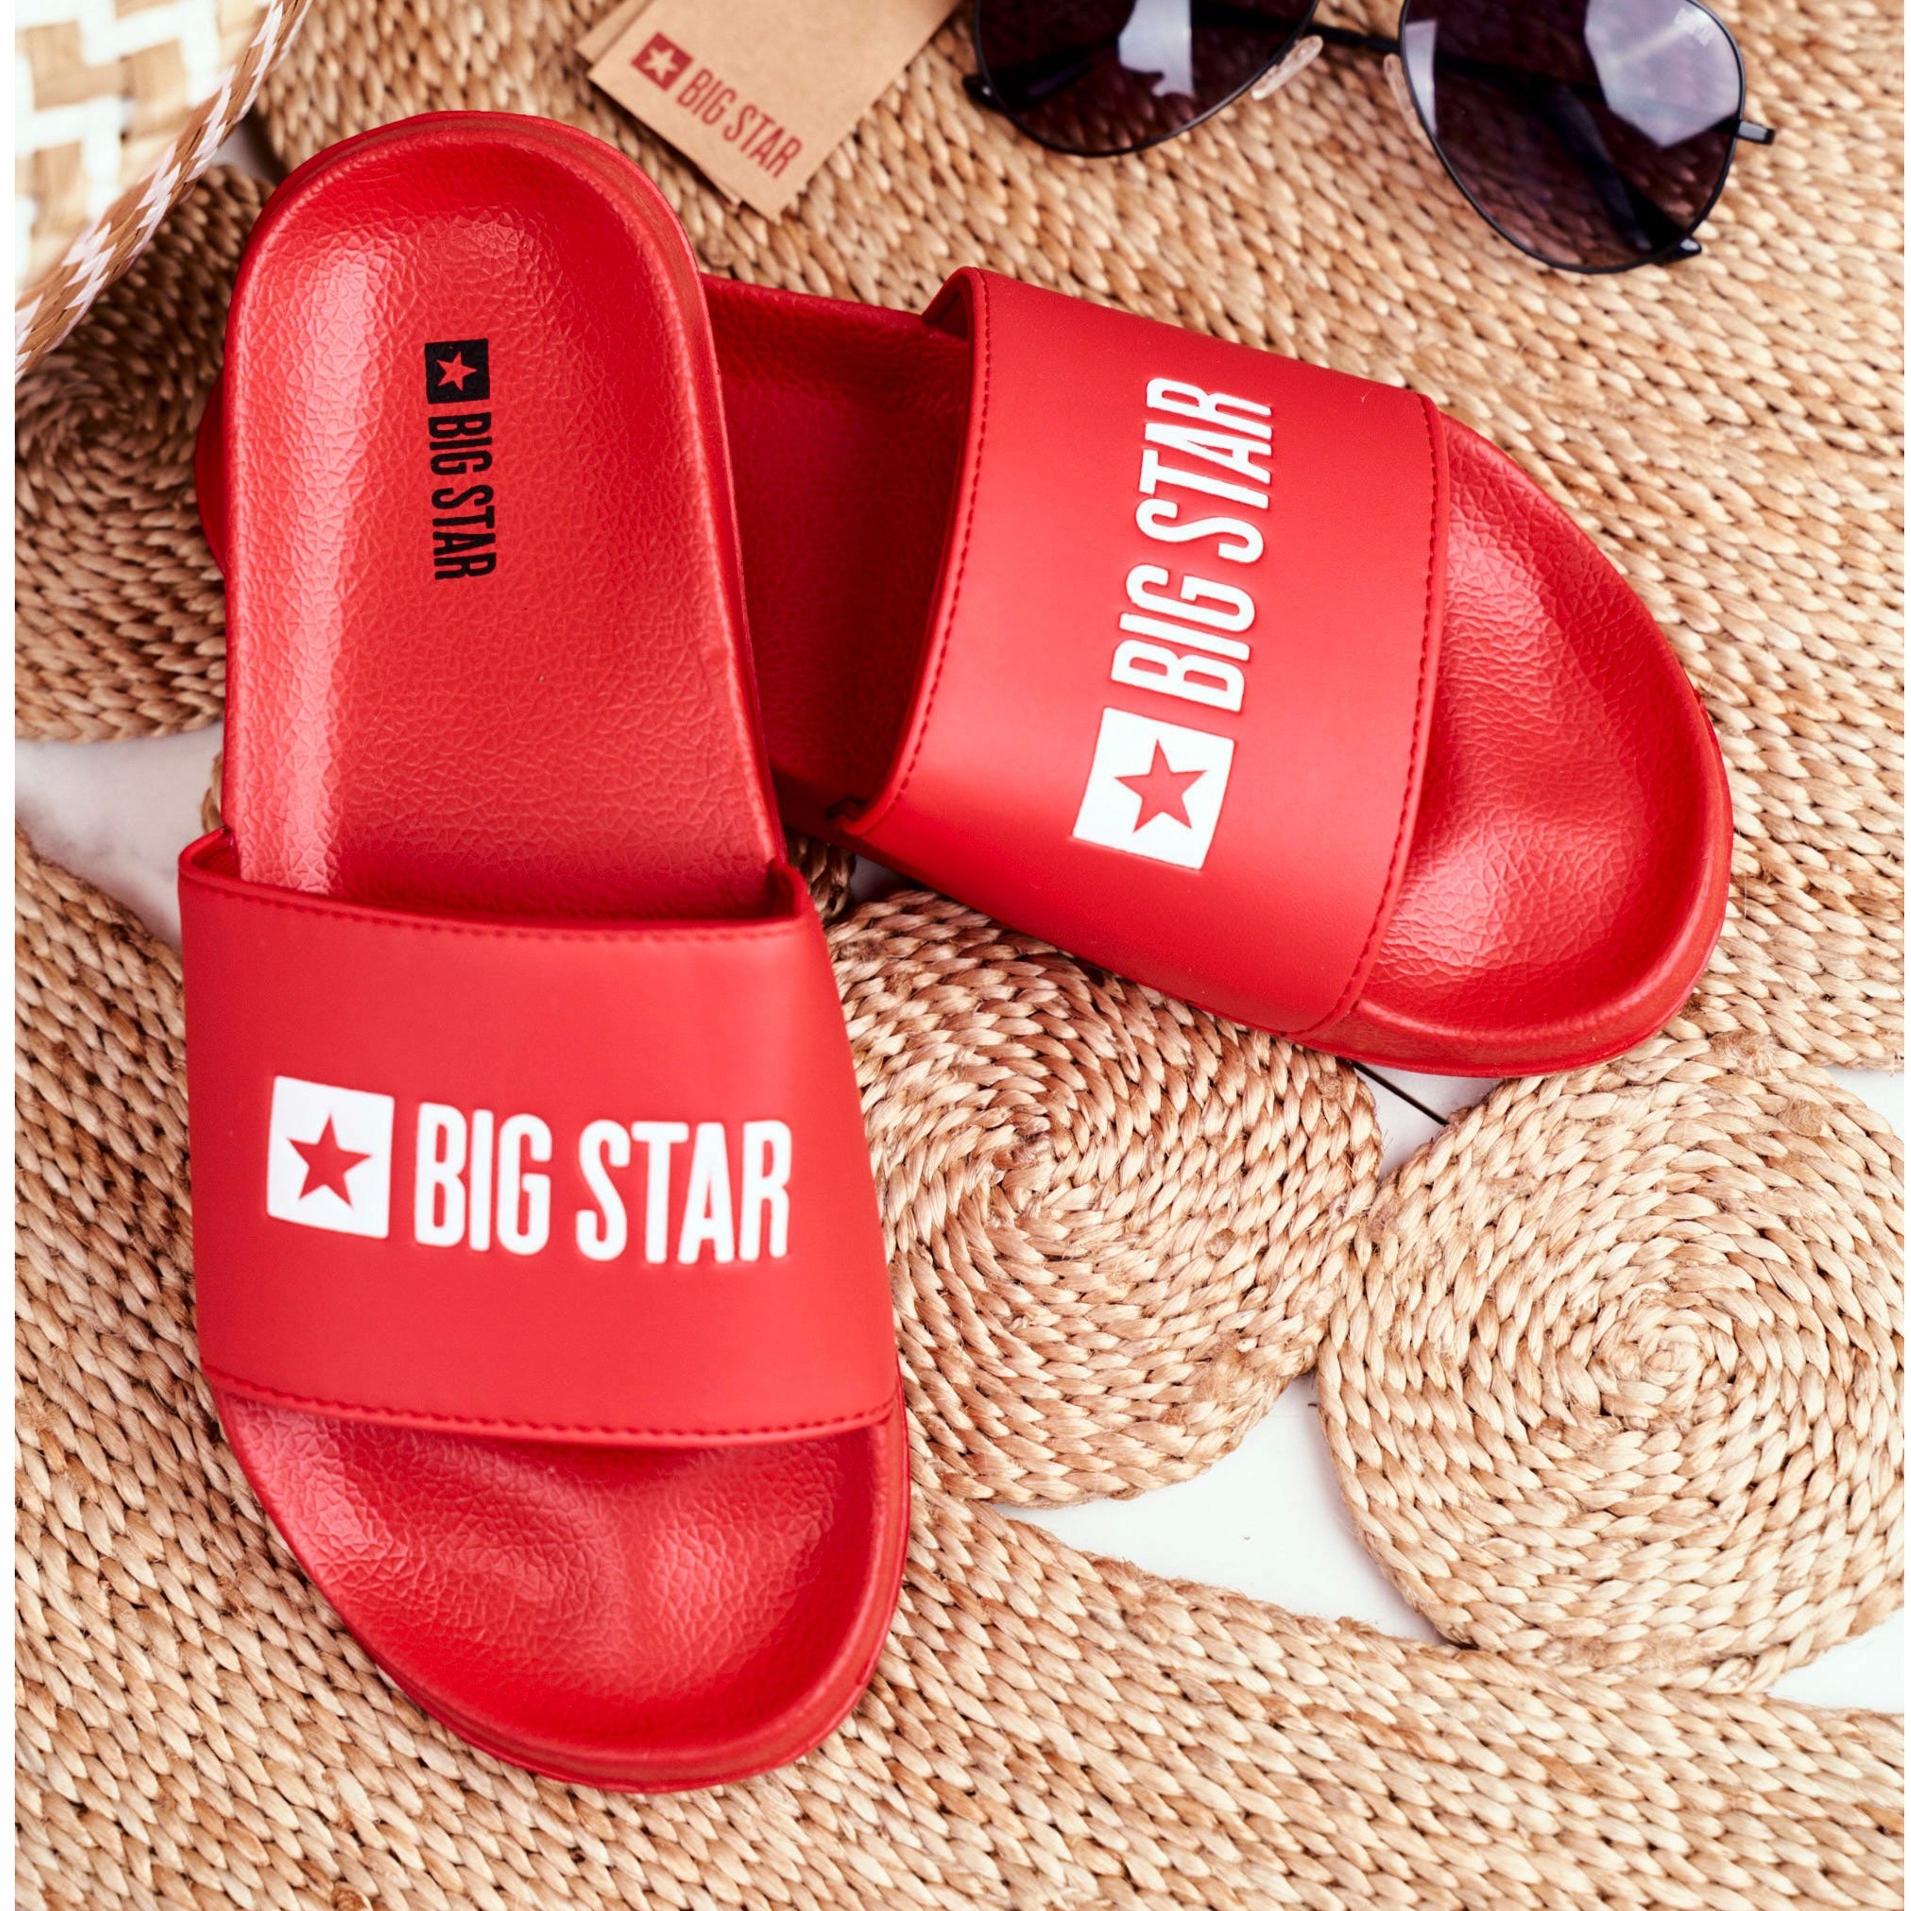 Guggenheim Museum sød smag Overtræder Women's Slippers Big Star Red GG274041 - KeeShoes